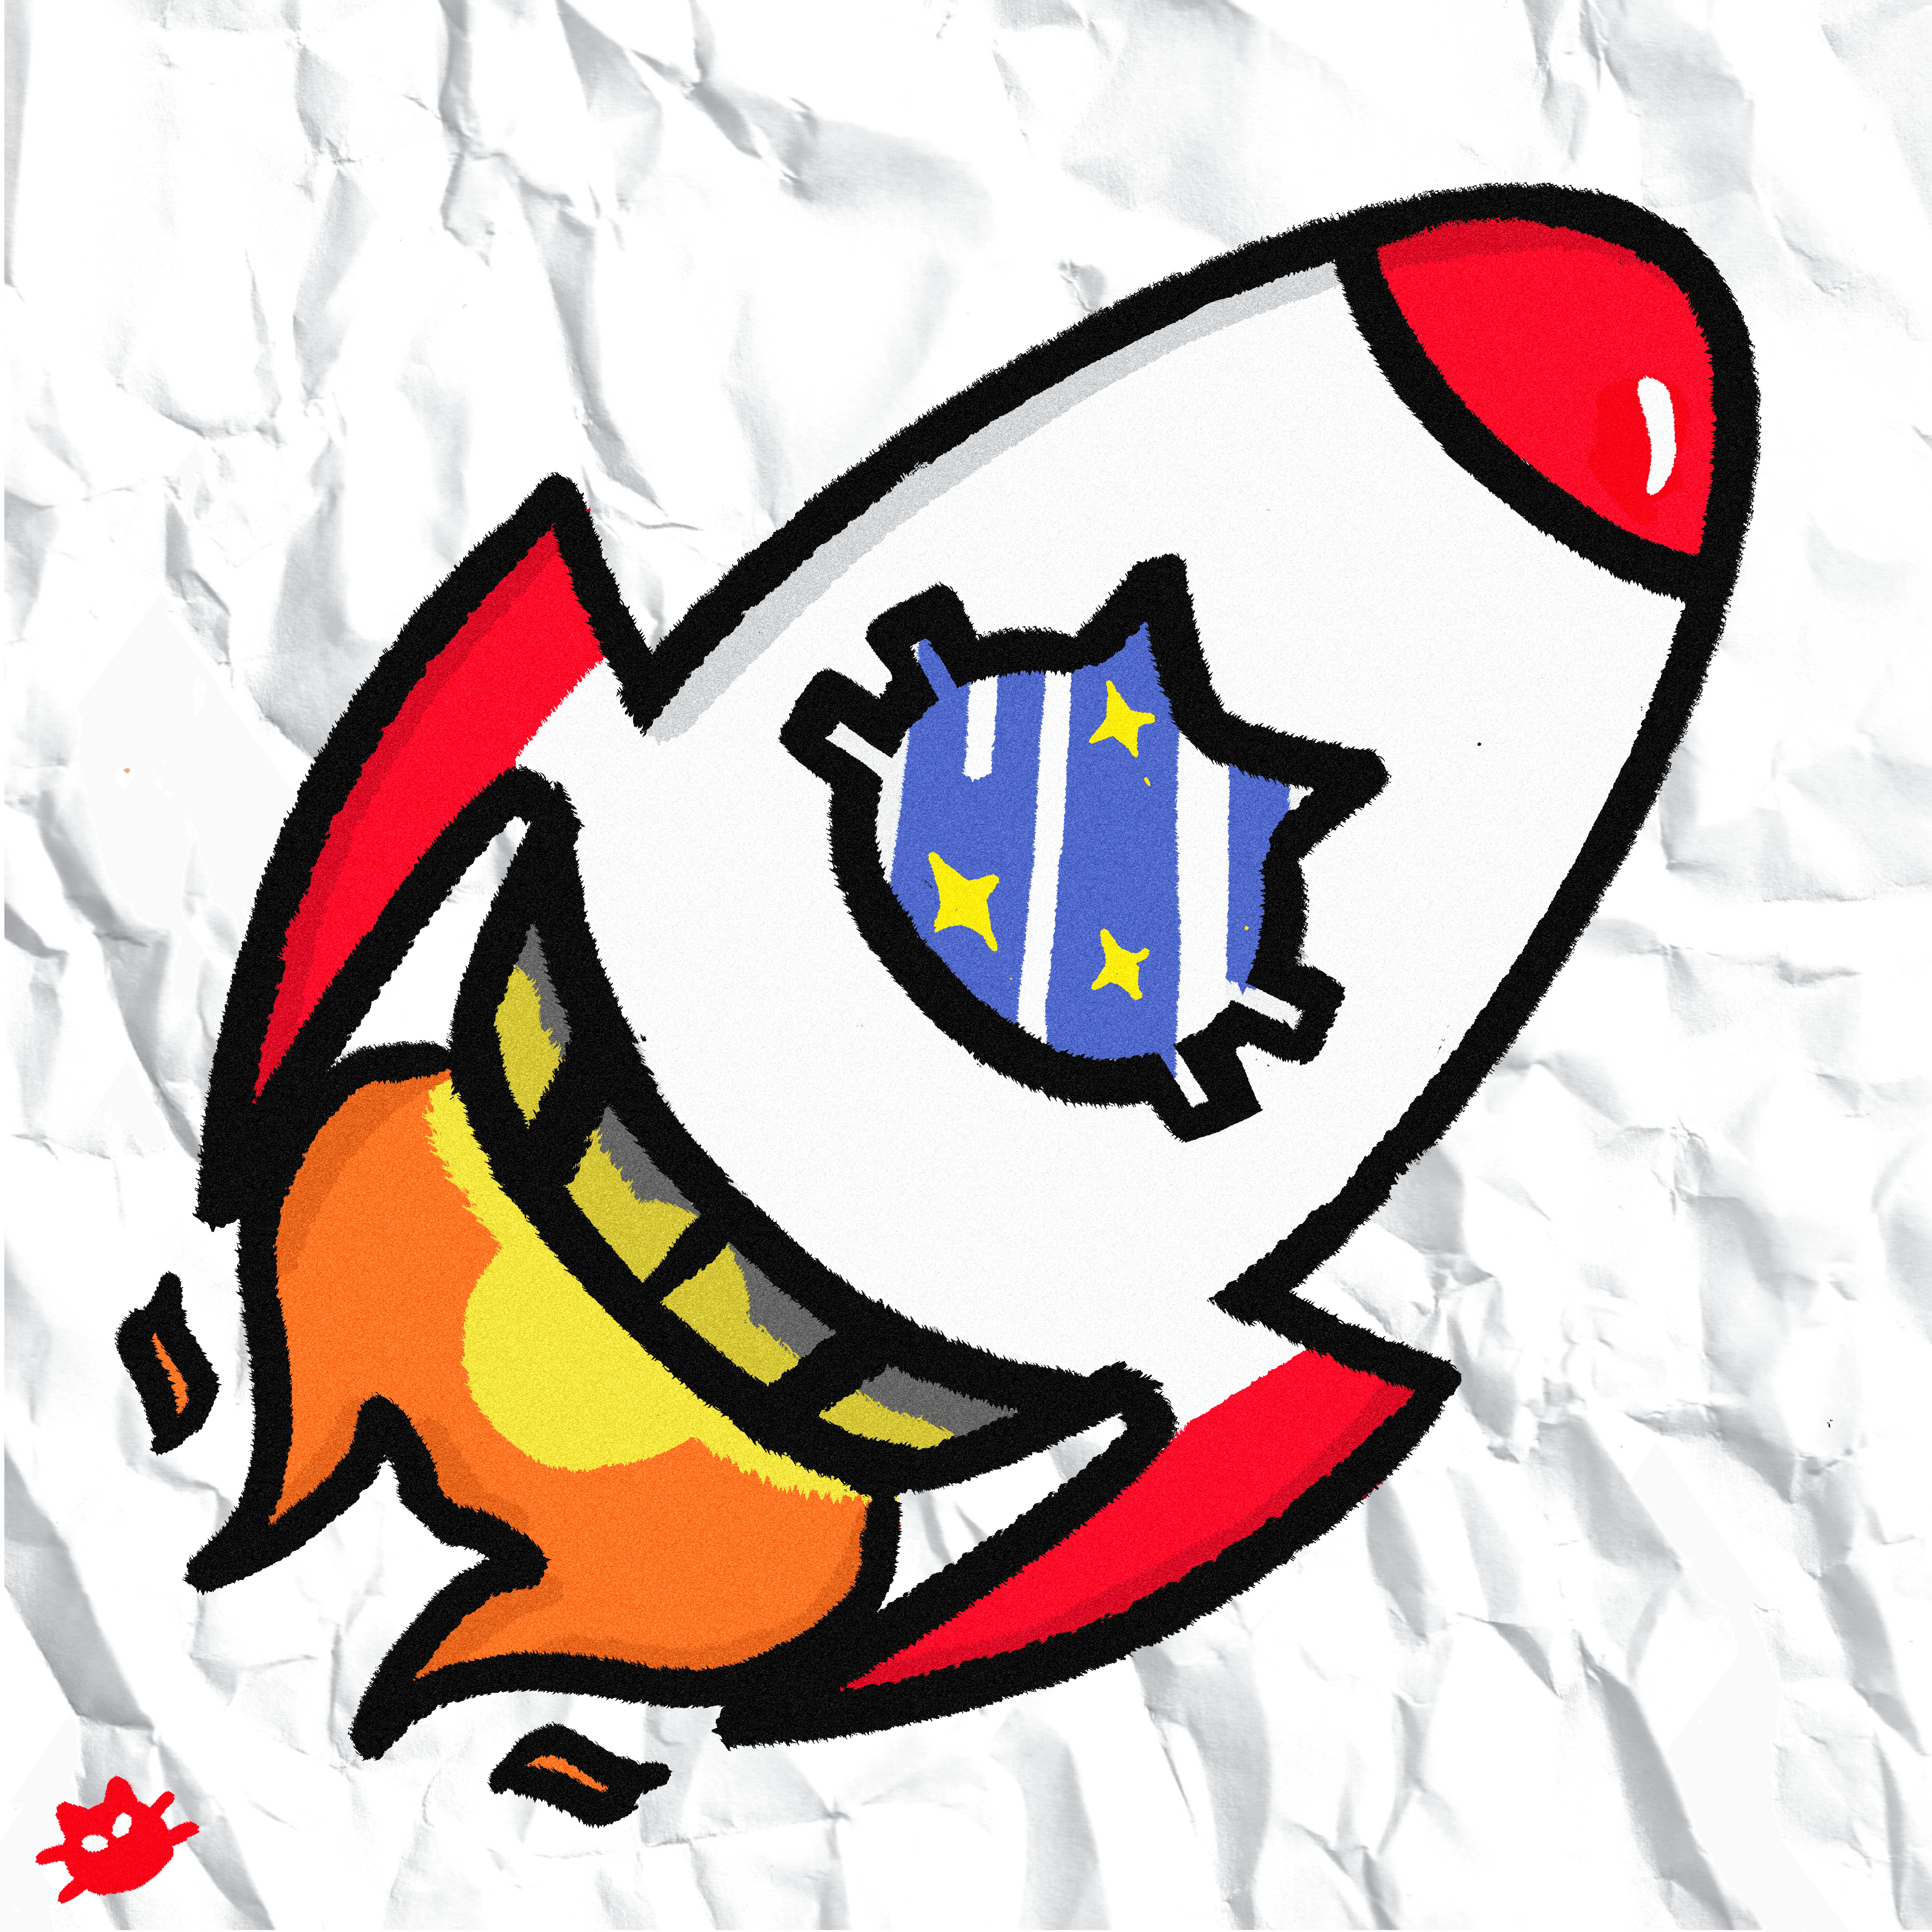 Toy Rocket